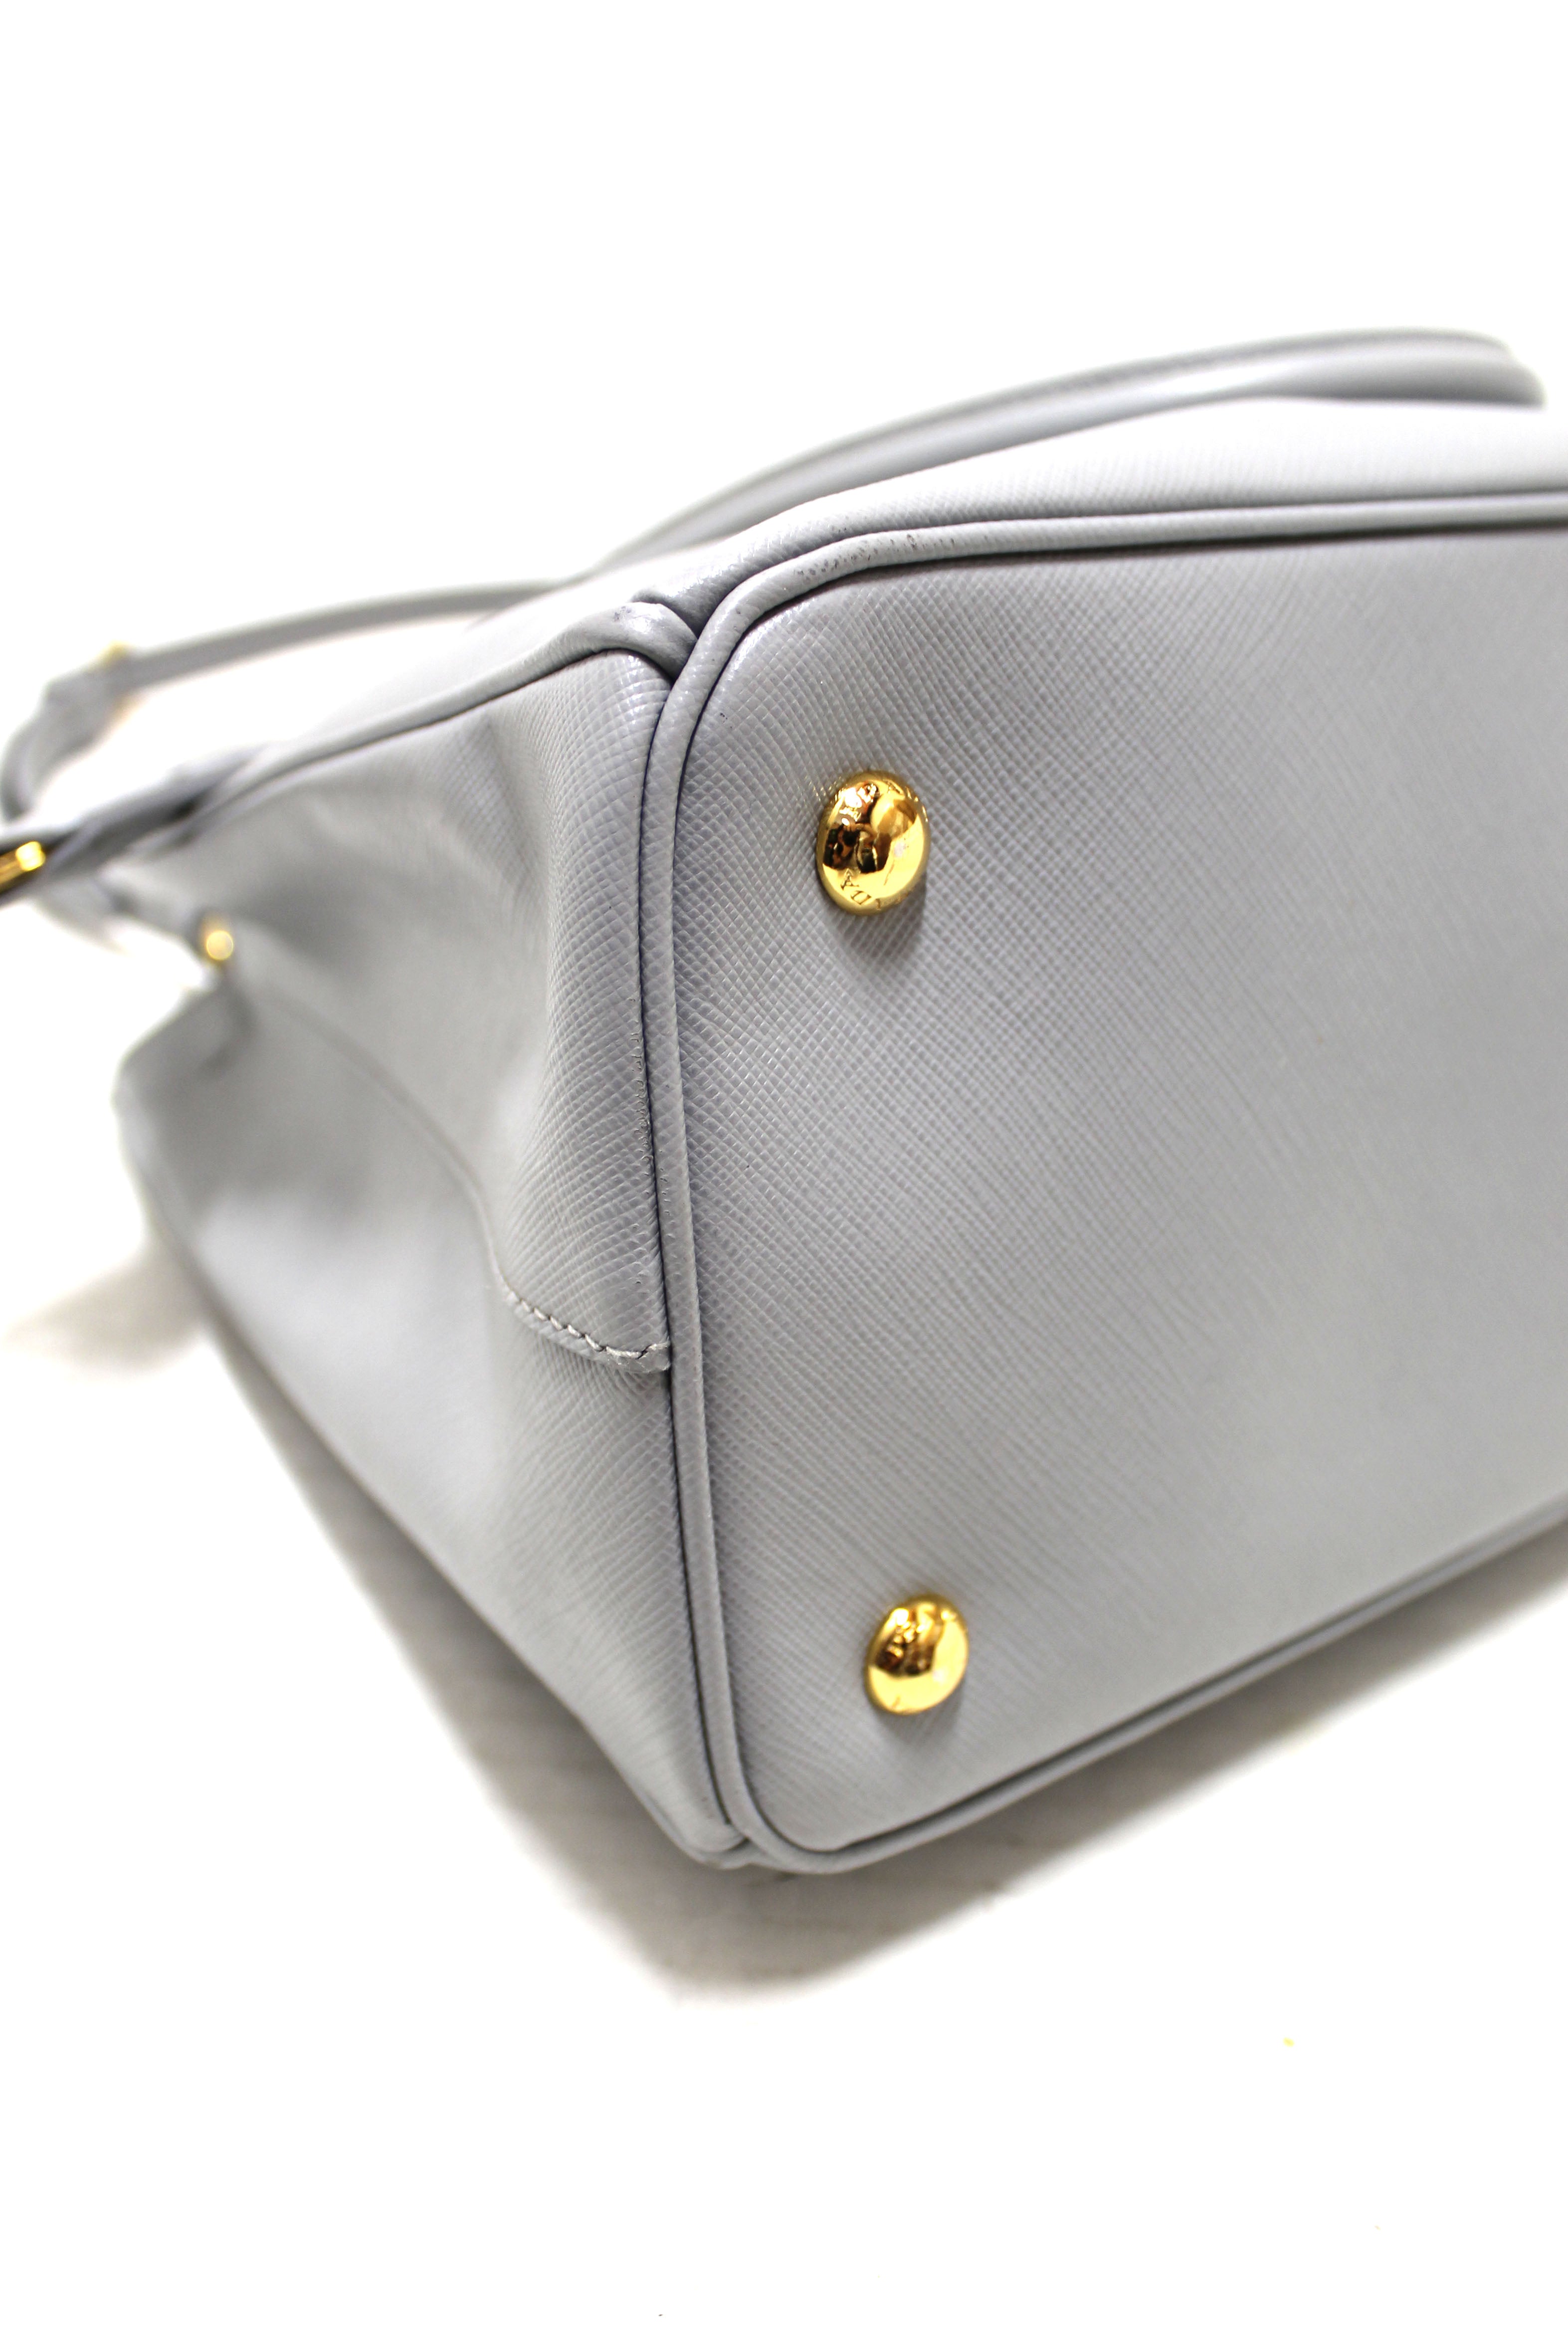 Authentic Prada Grey Saffiano Lux Leather Galleria Large Tote Bag